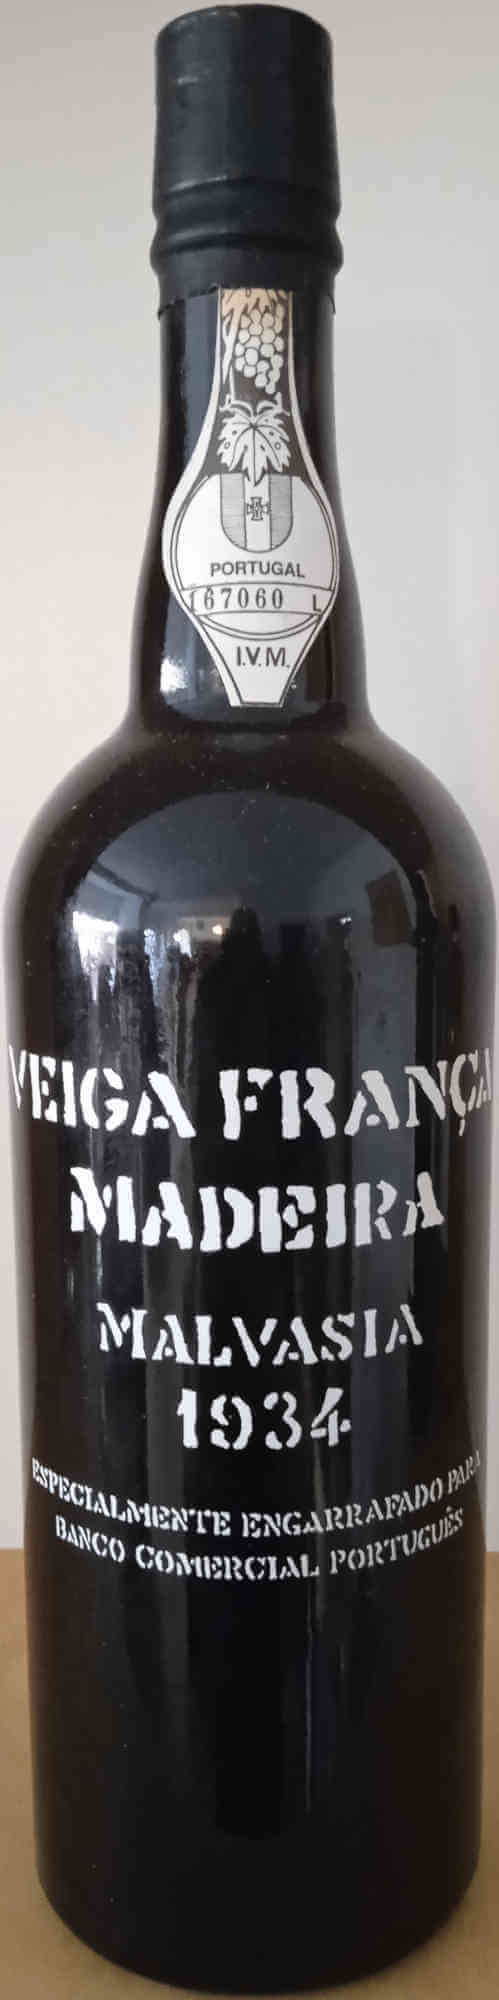 Veiga-Franca-Madeira-Malvasia-1934